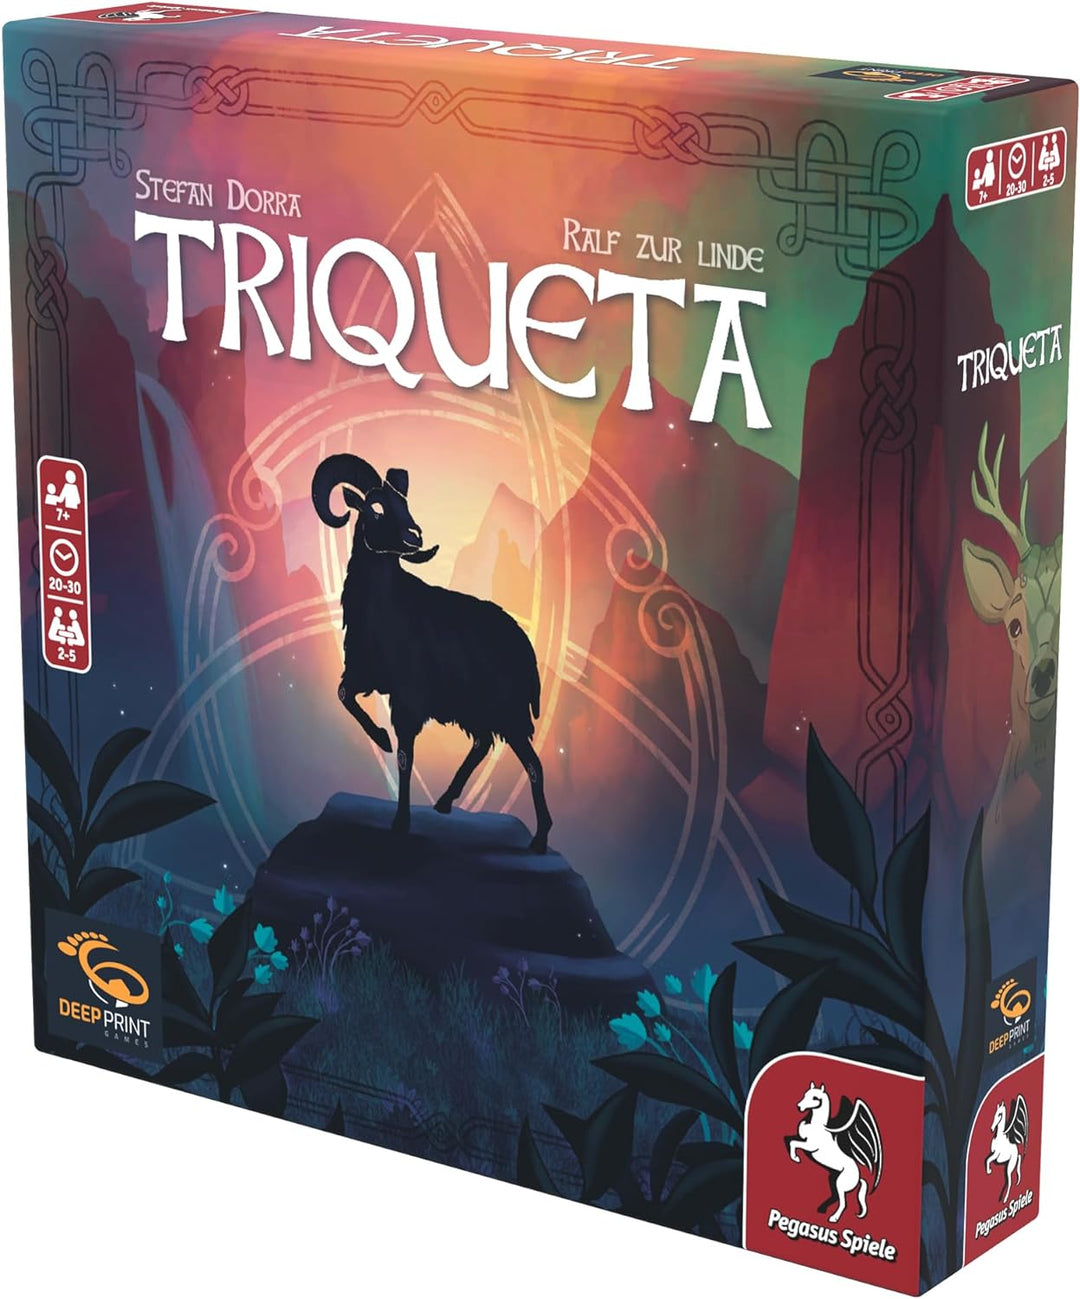 Triqueta  Board Games (Deep Print Games) (English Edition)